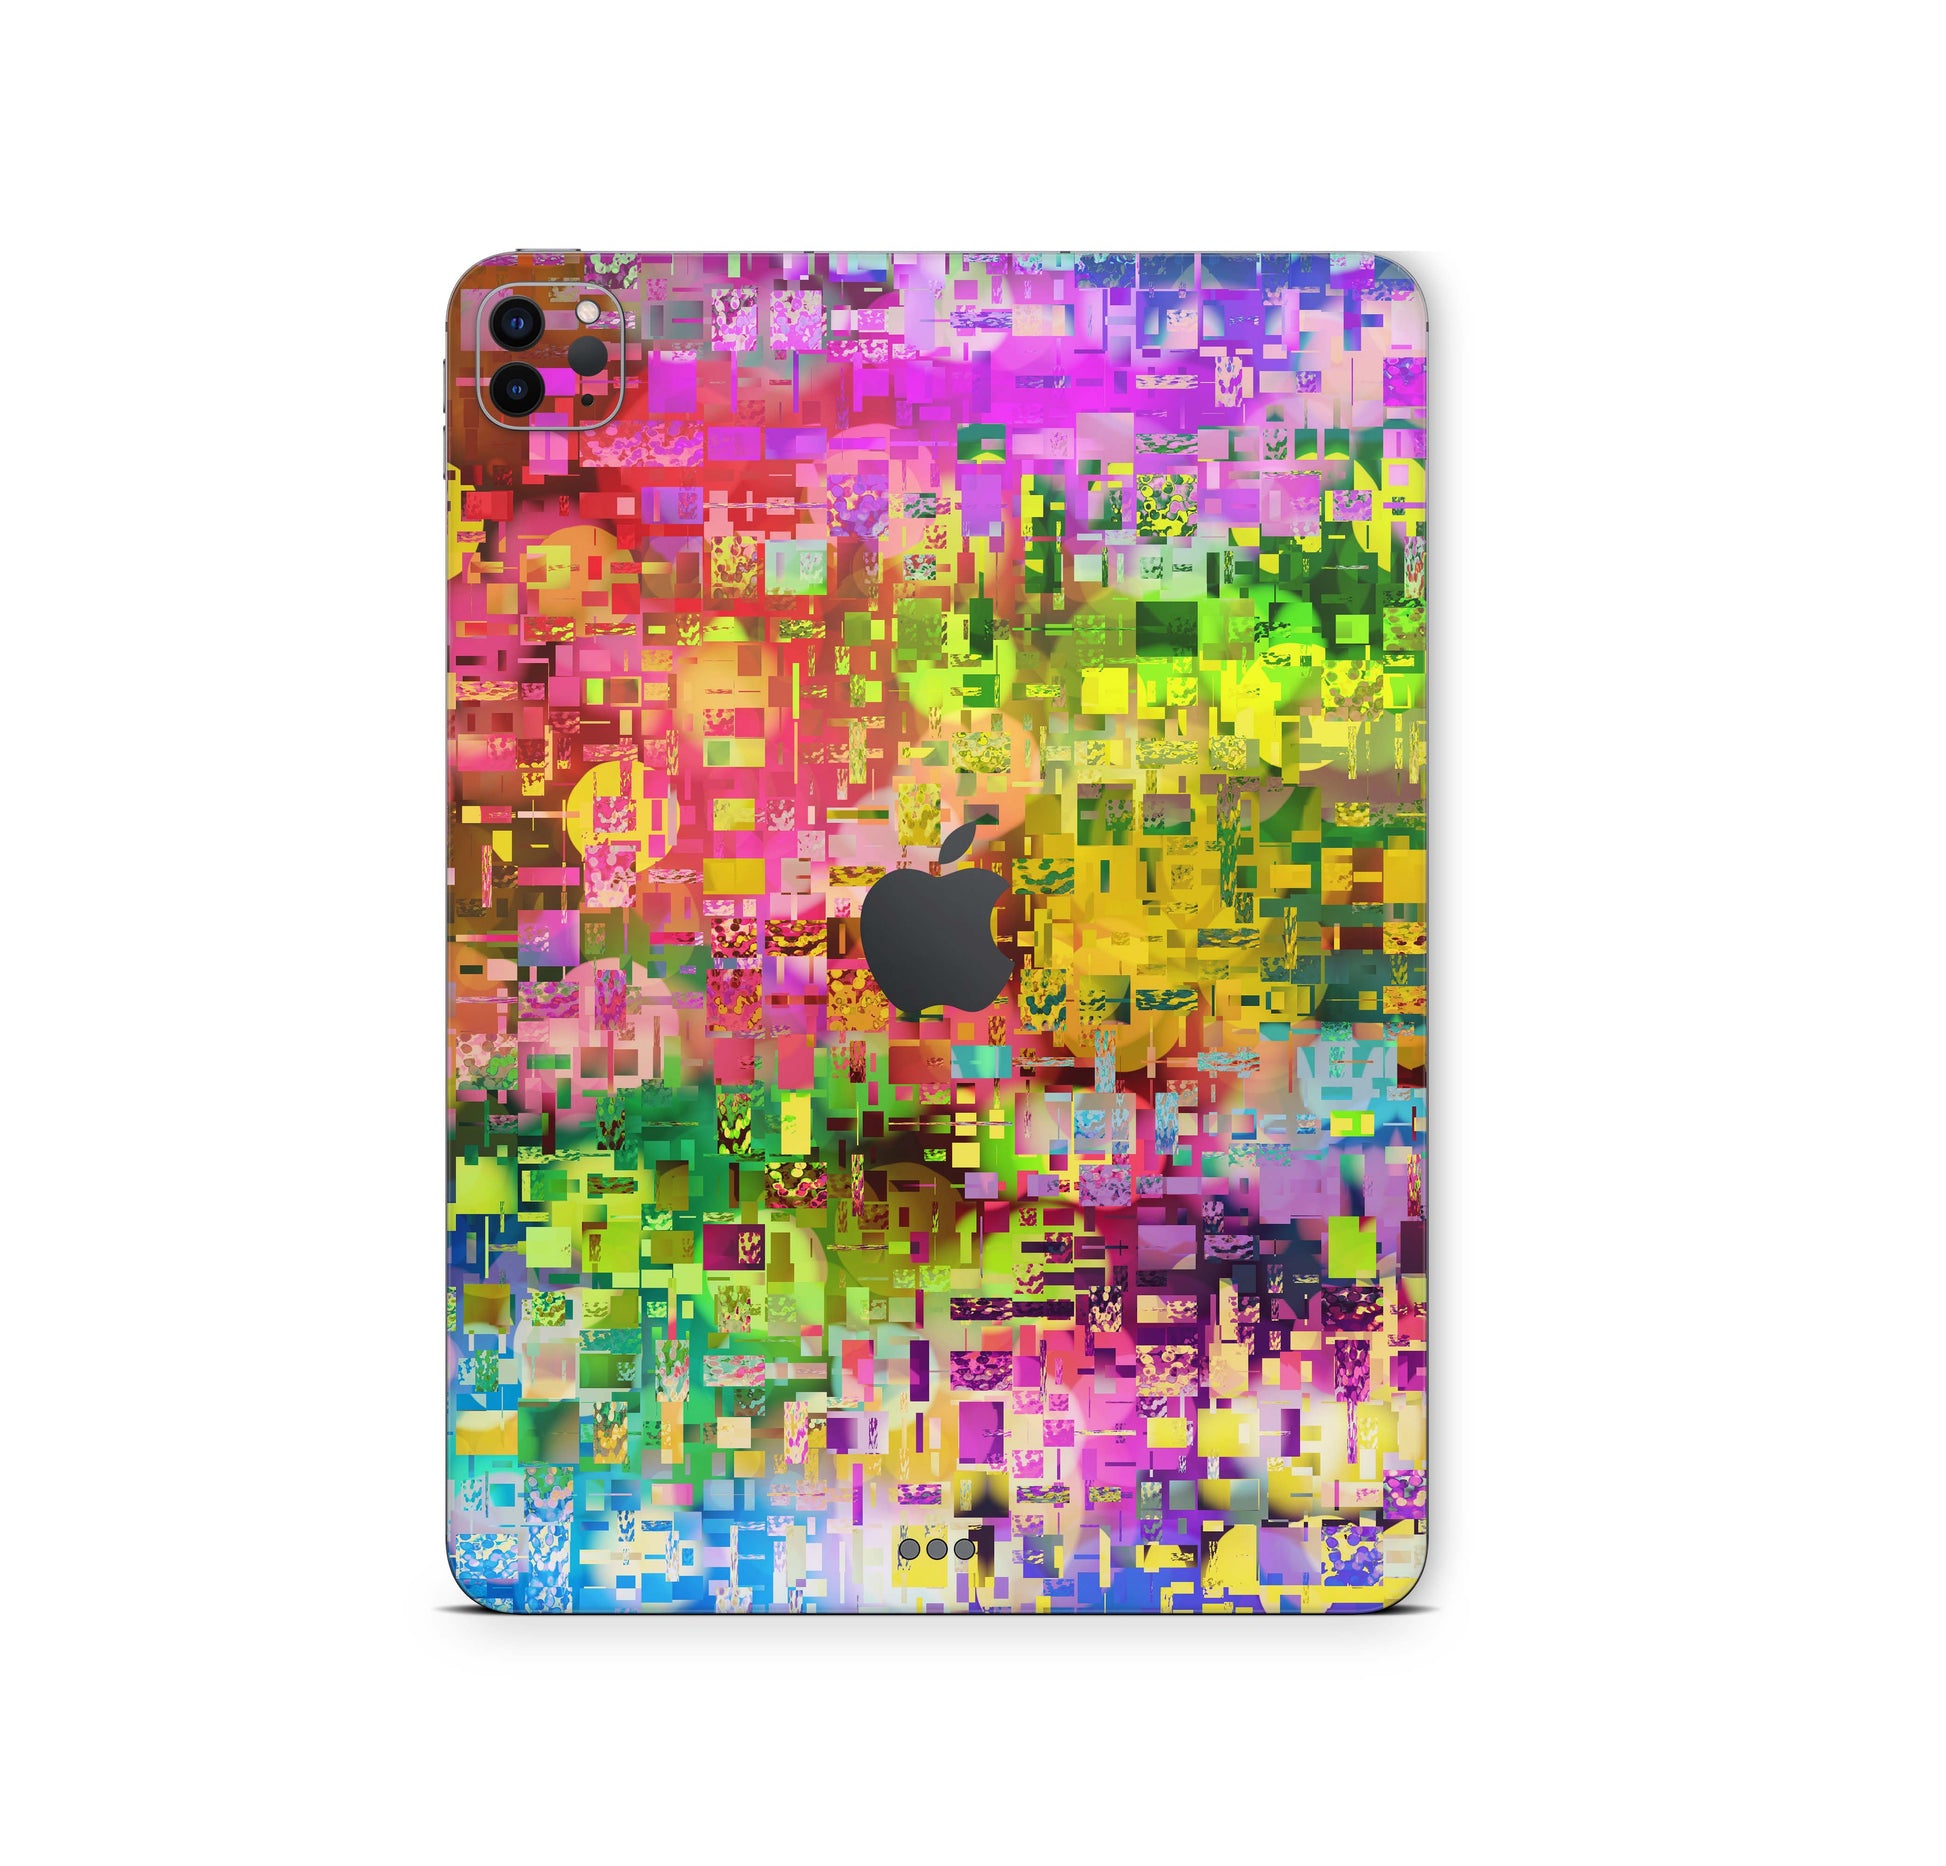 iPad Pro Skin 11" 2.Generation A2228 Design Cover Folie Vinyl Skins & Wraps Aufkleber Skins4u Abstract  